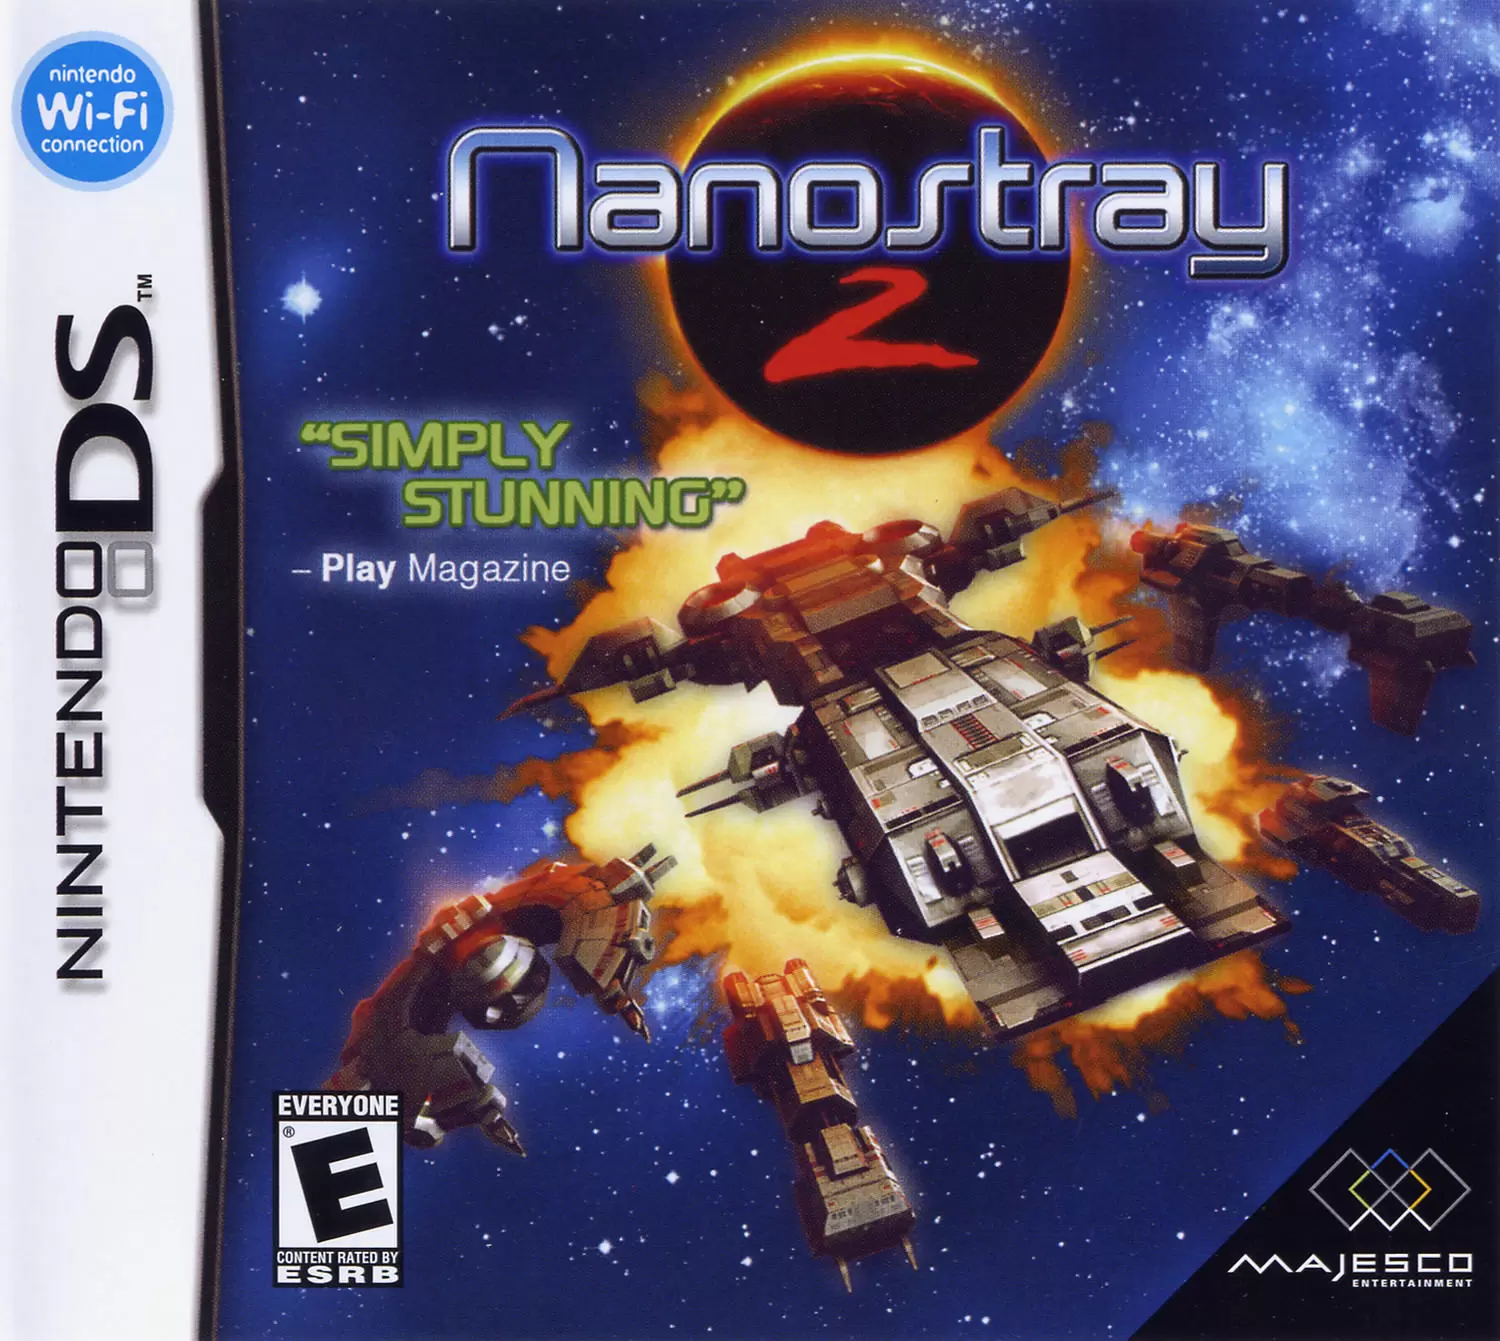 Nintendo DS Games - Nanostray 2